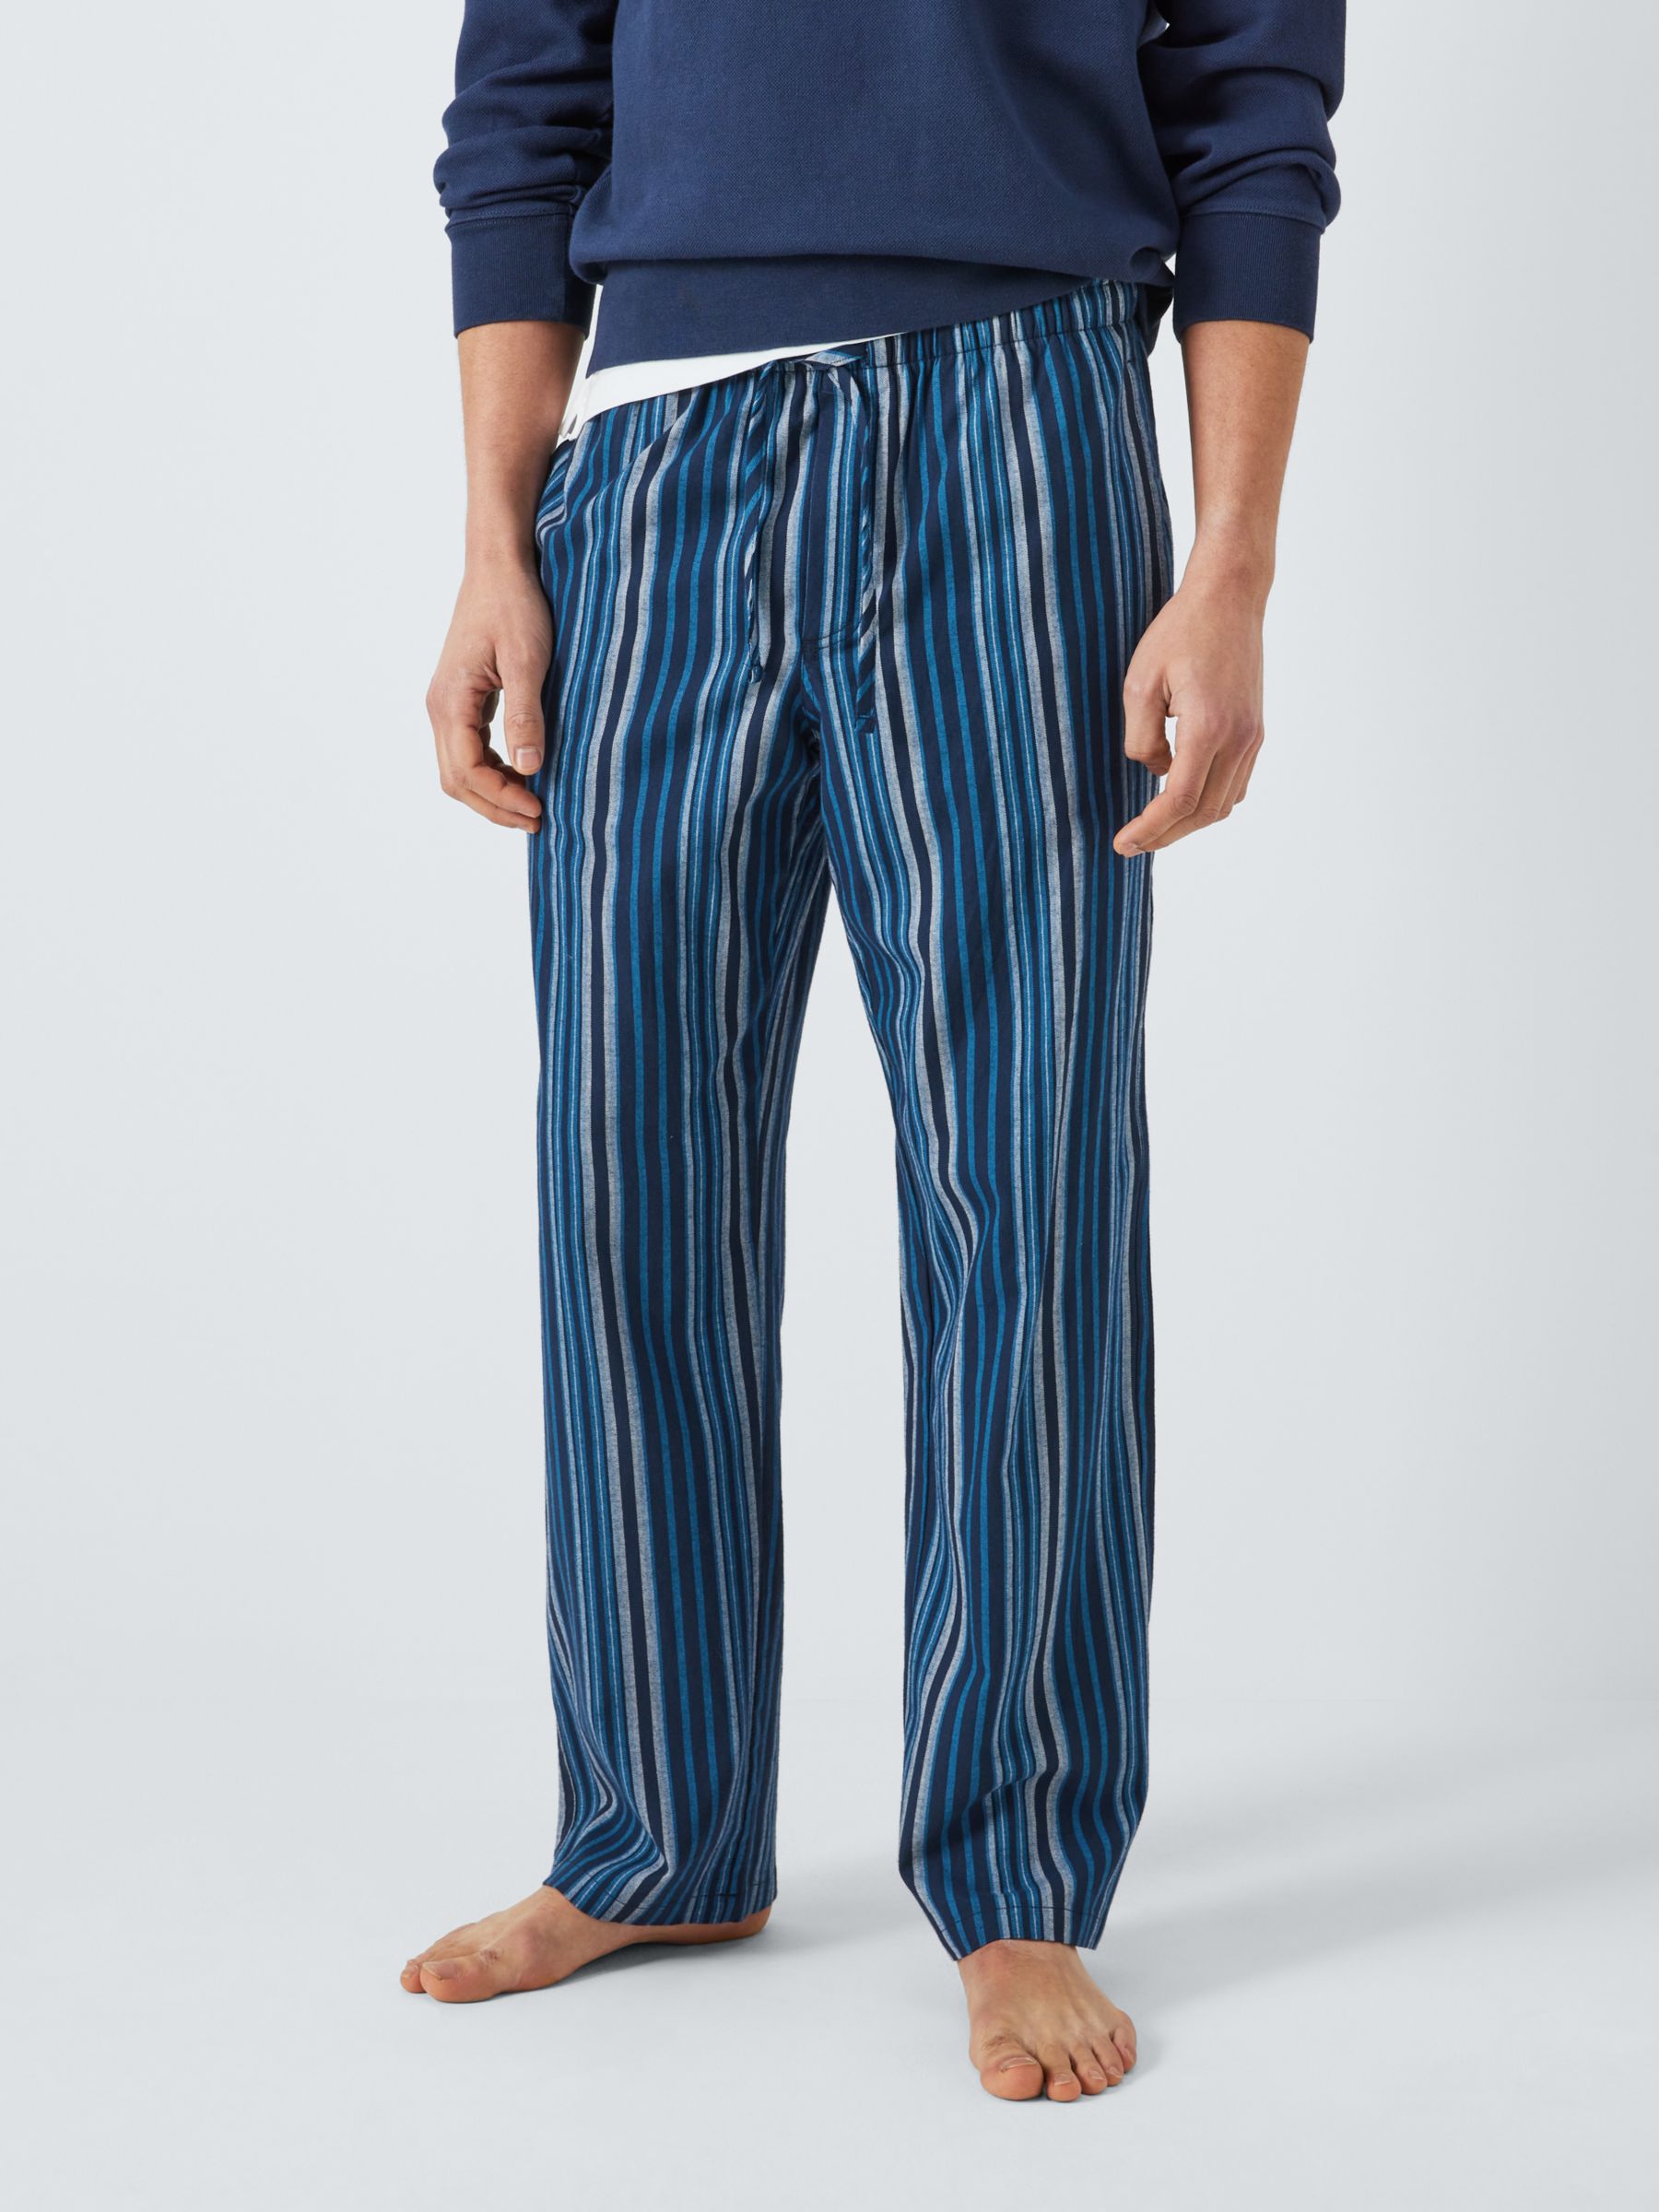 Ladies Pyjamas lounge pants brushed cotton cuff and pocket bottoms